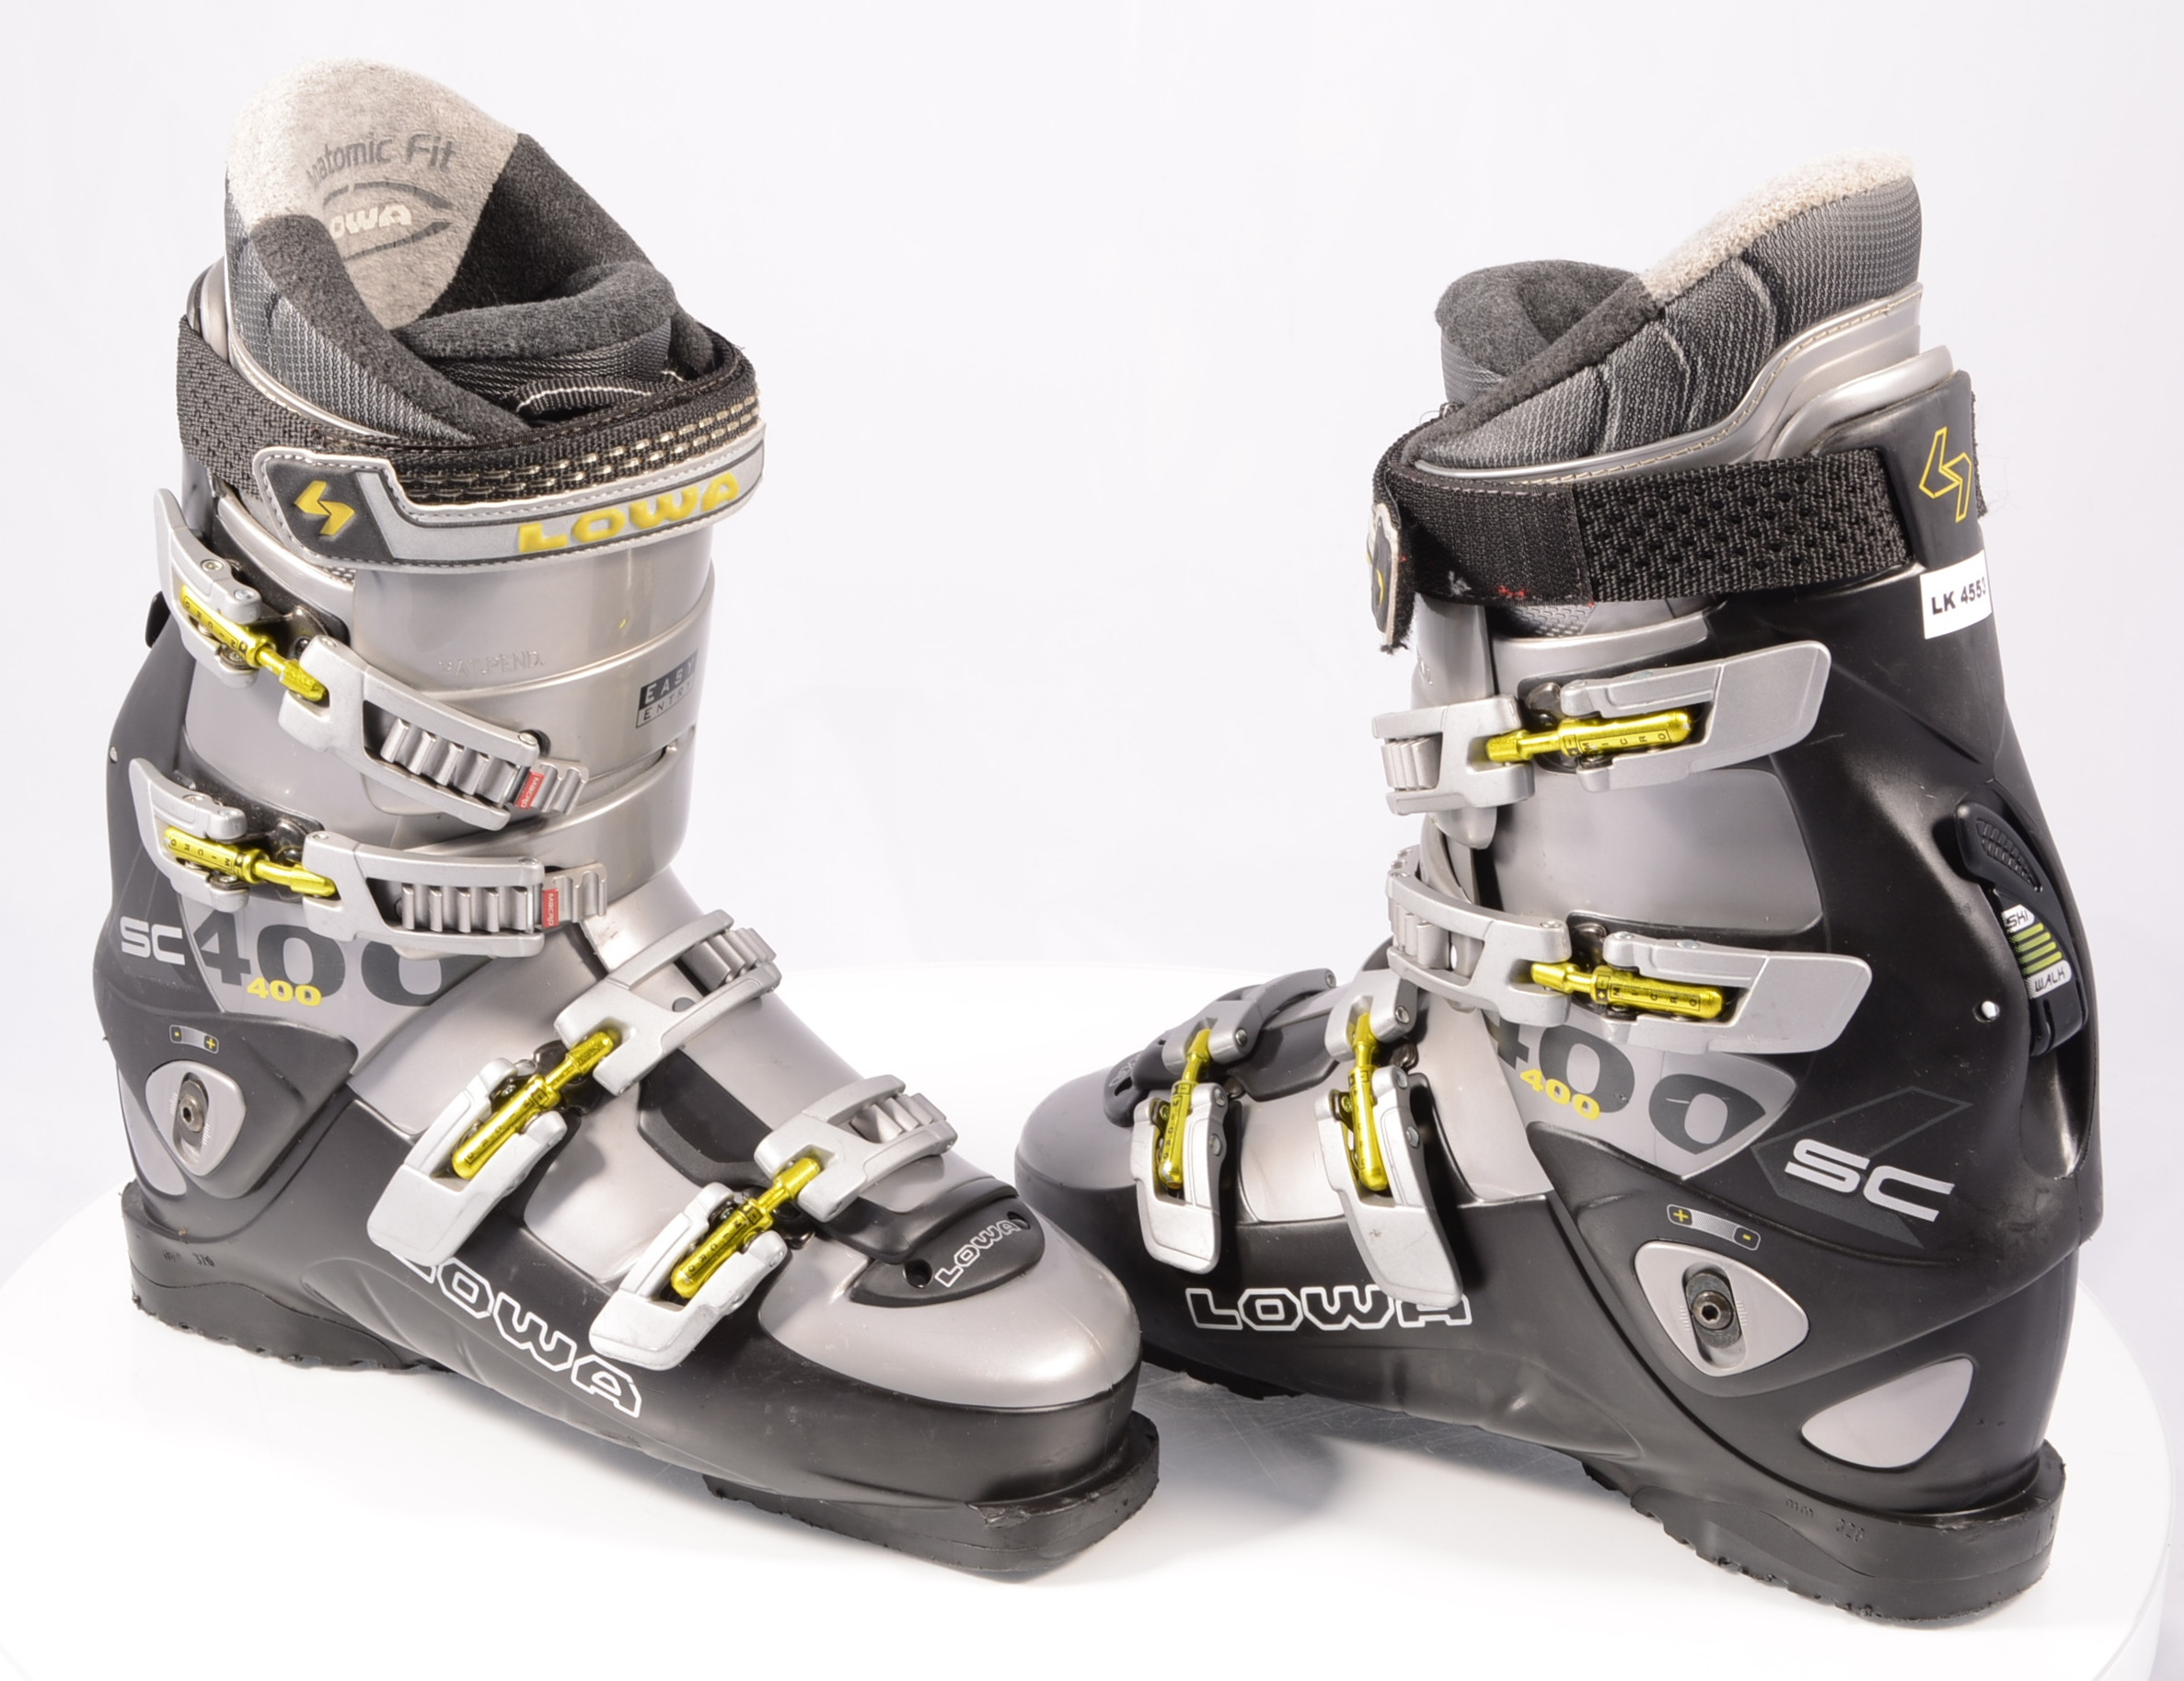 Aanvankelijk Portaal Helderheid skischoenen LOWA SC 400, Anatomic fit, Easy entry, SKI/WALK, Canting, micro  - Mardosport.nl